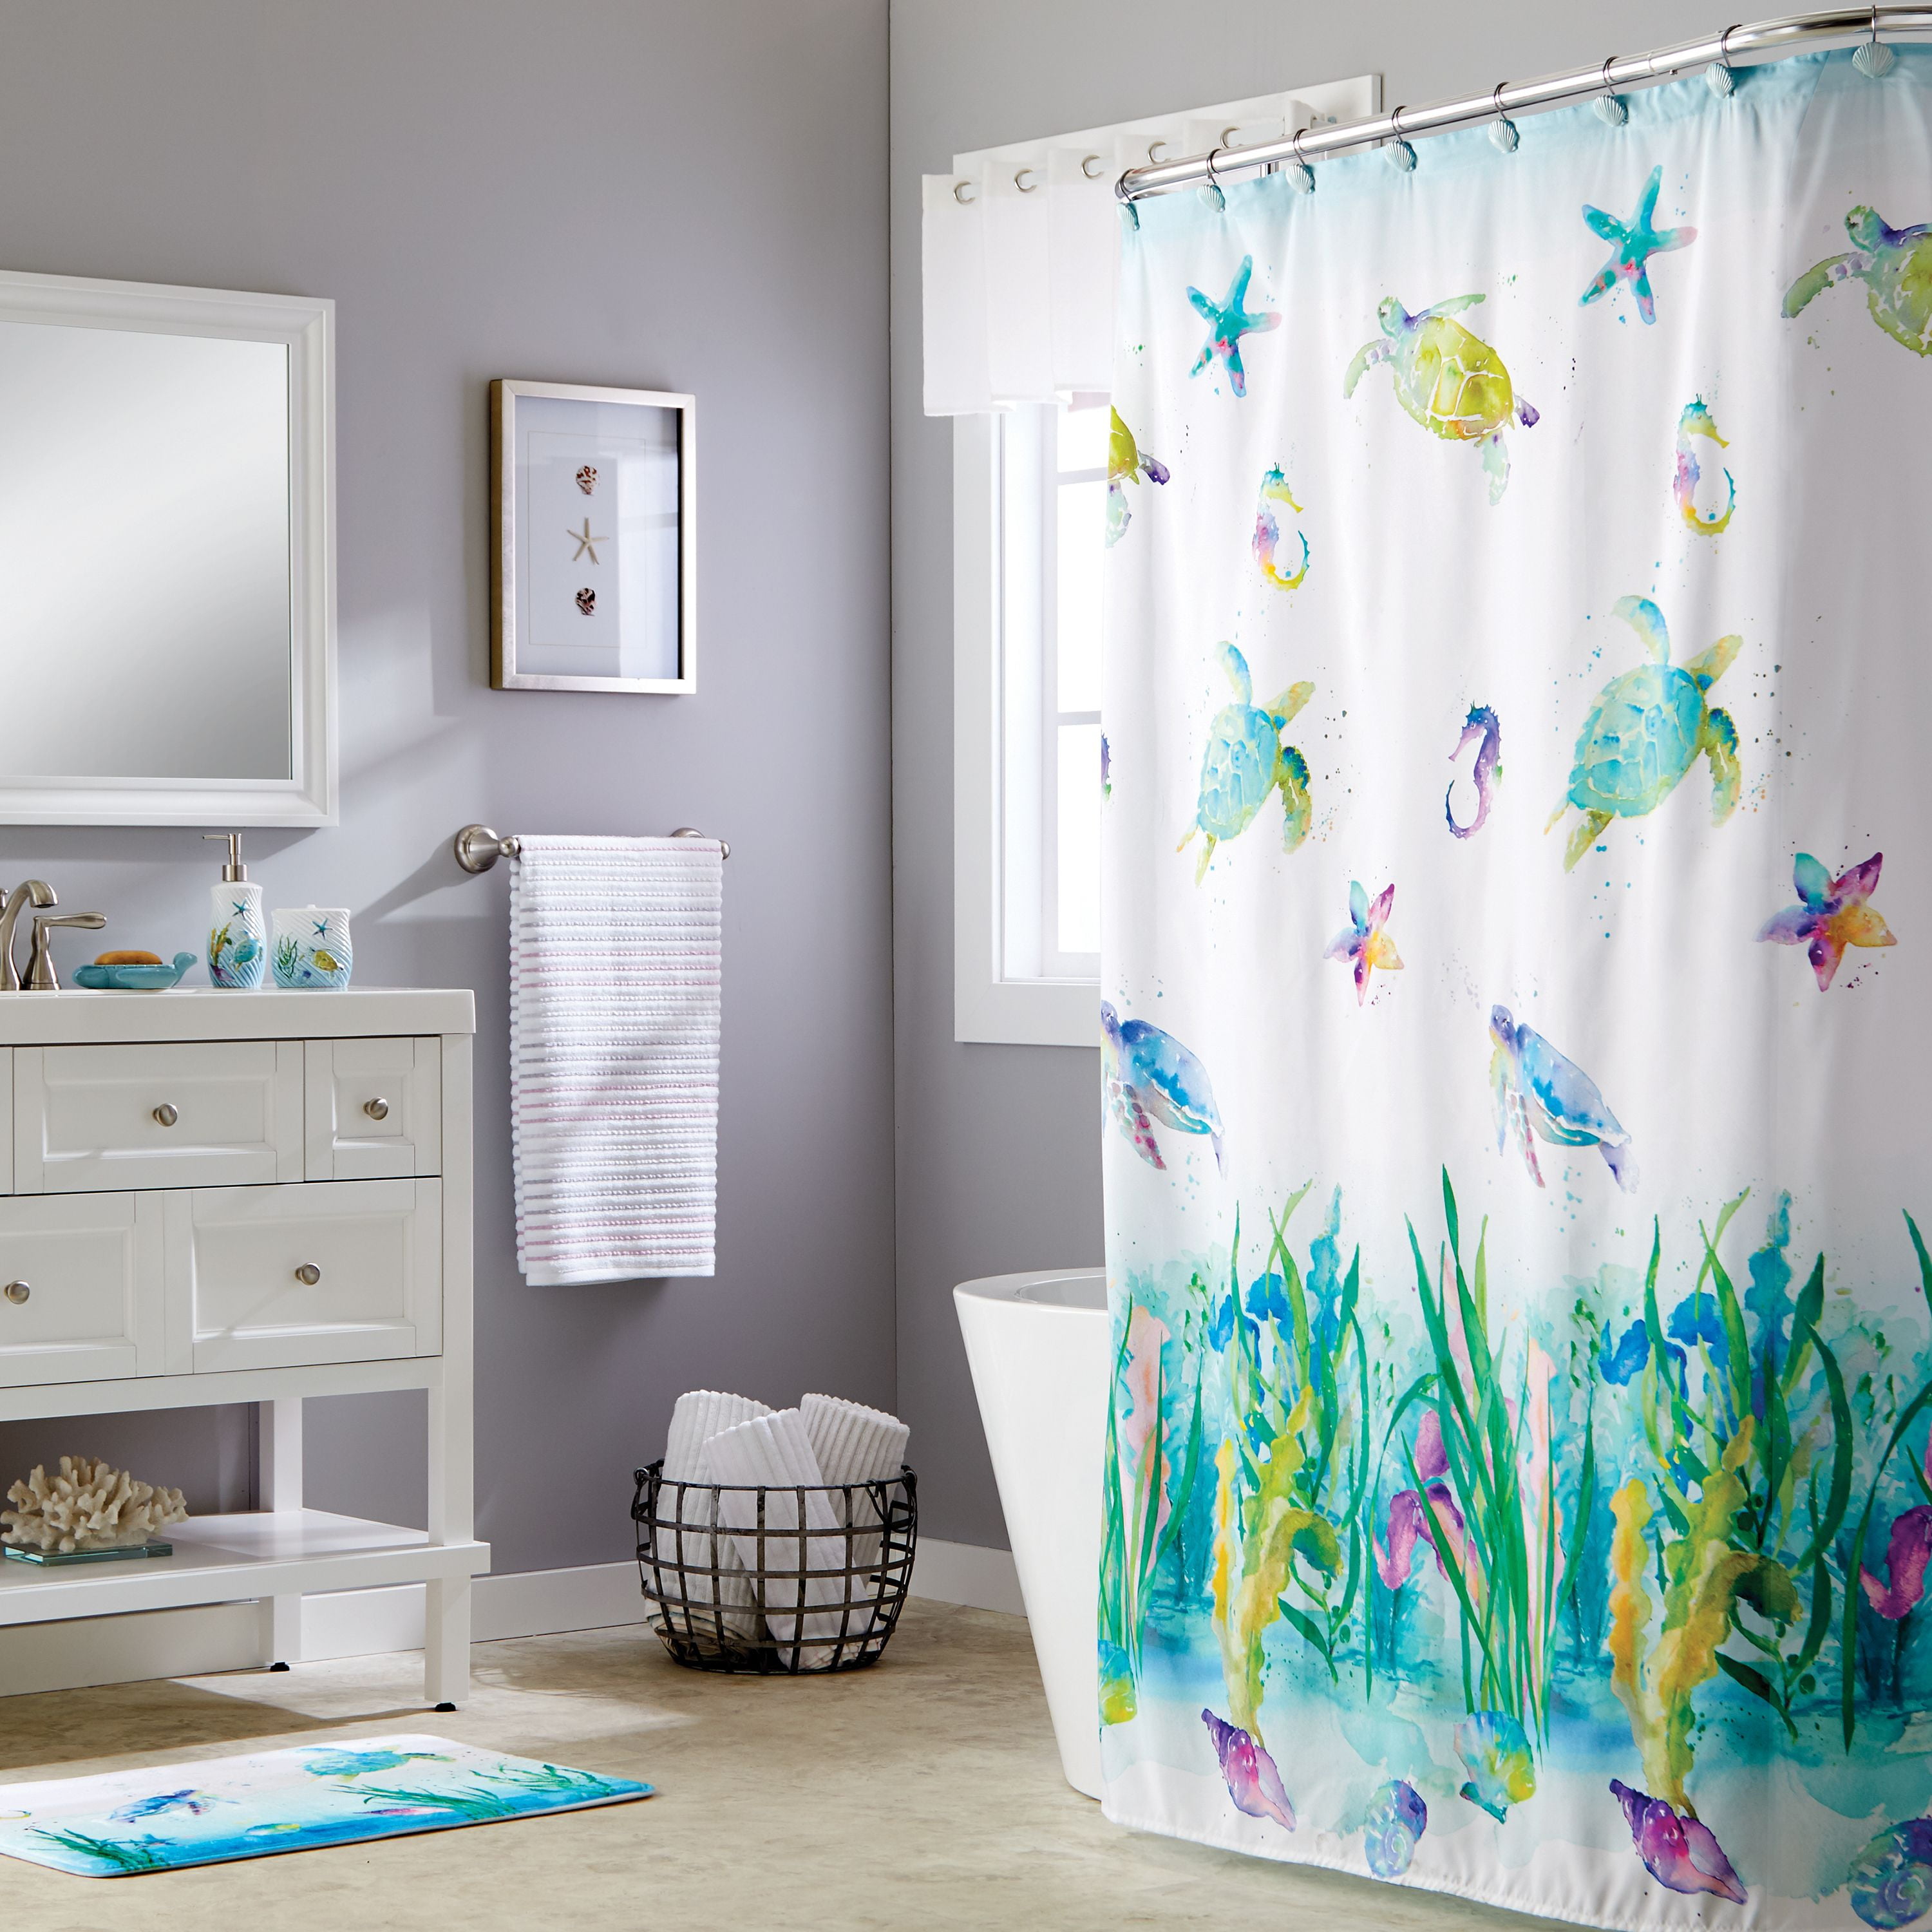 Details about   Watercolor Little Girl Yoga Meditation Fabric Shower Curtain Set Bathroom Decor 